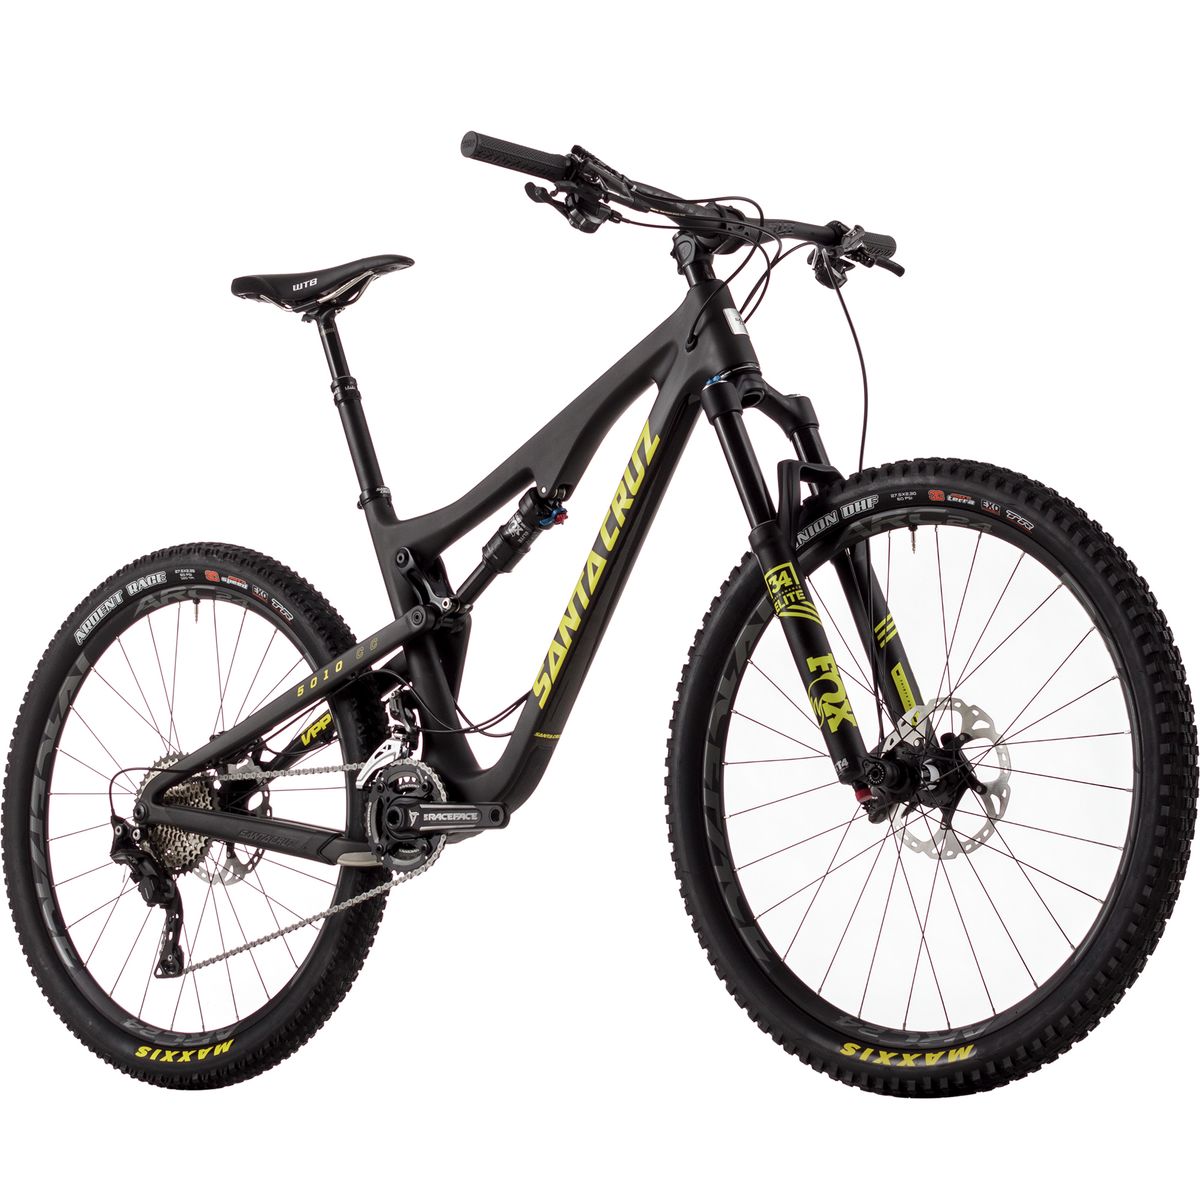 Santa Cruz Bicycles 5010 20 Carbon CC XT Complete Mountain Bike 2017